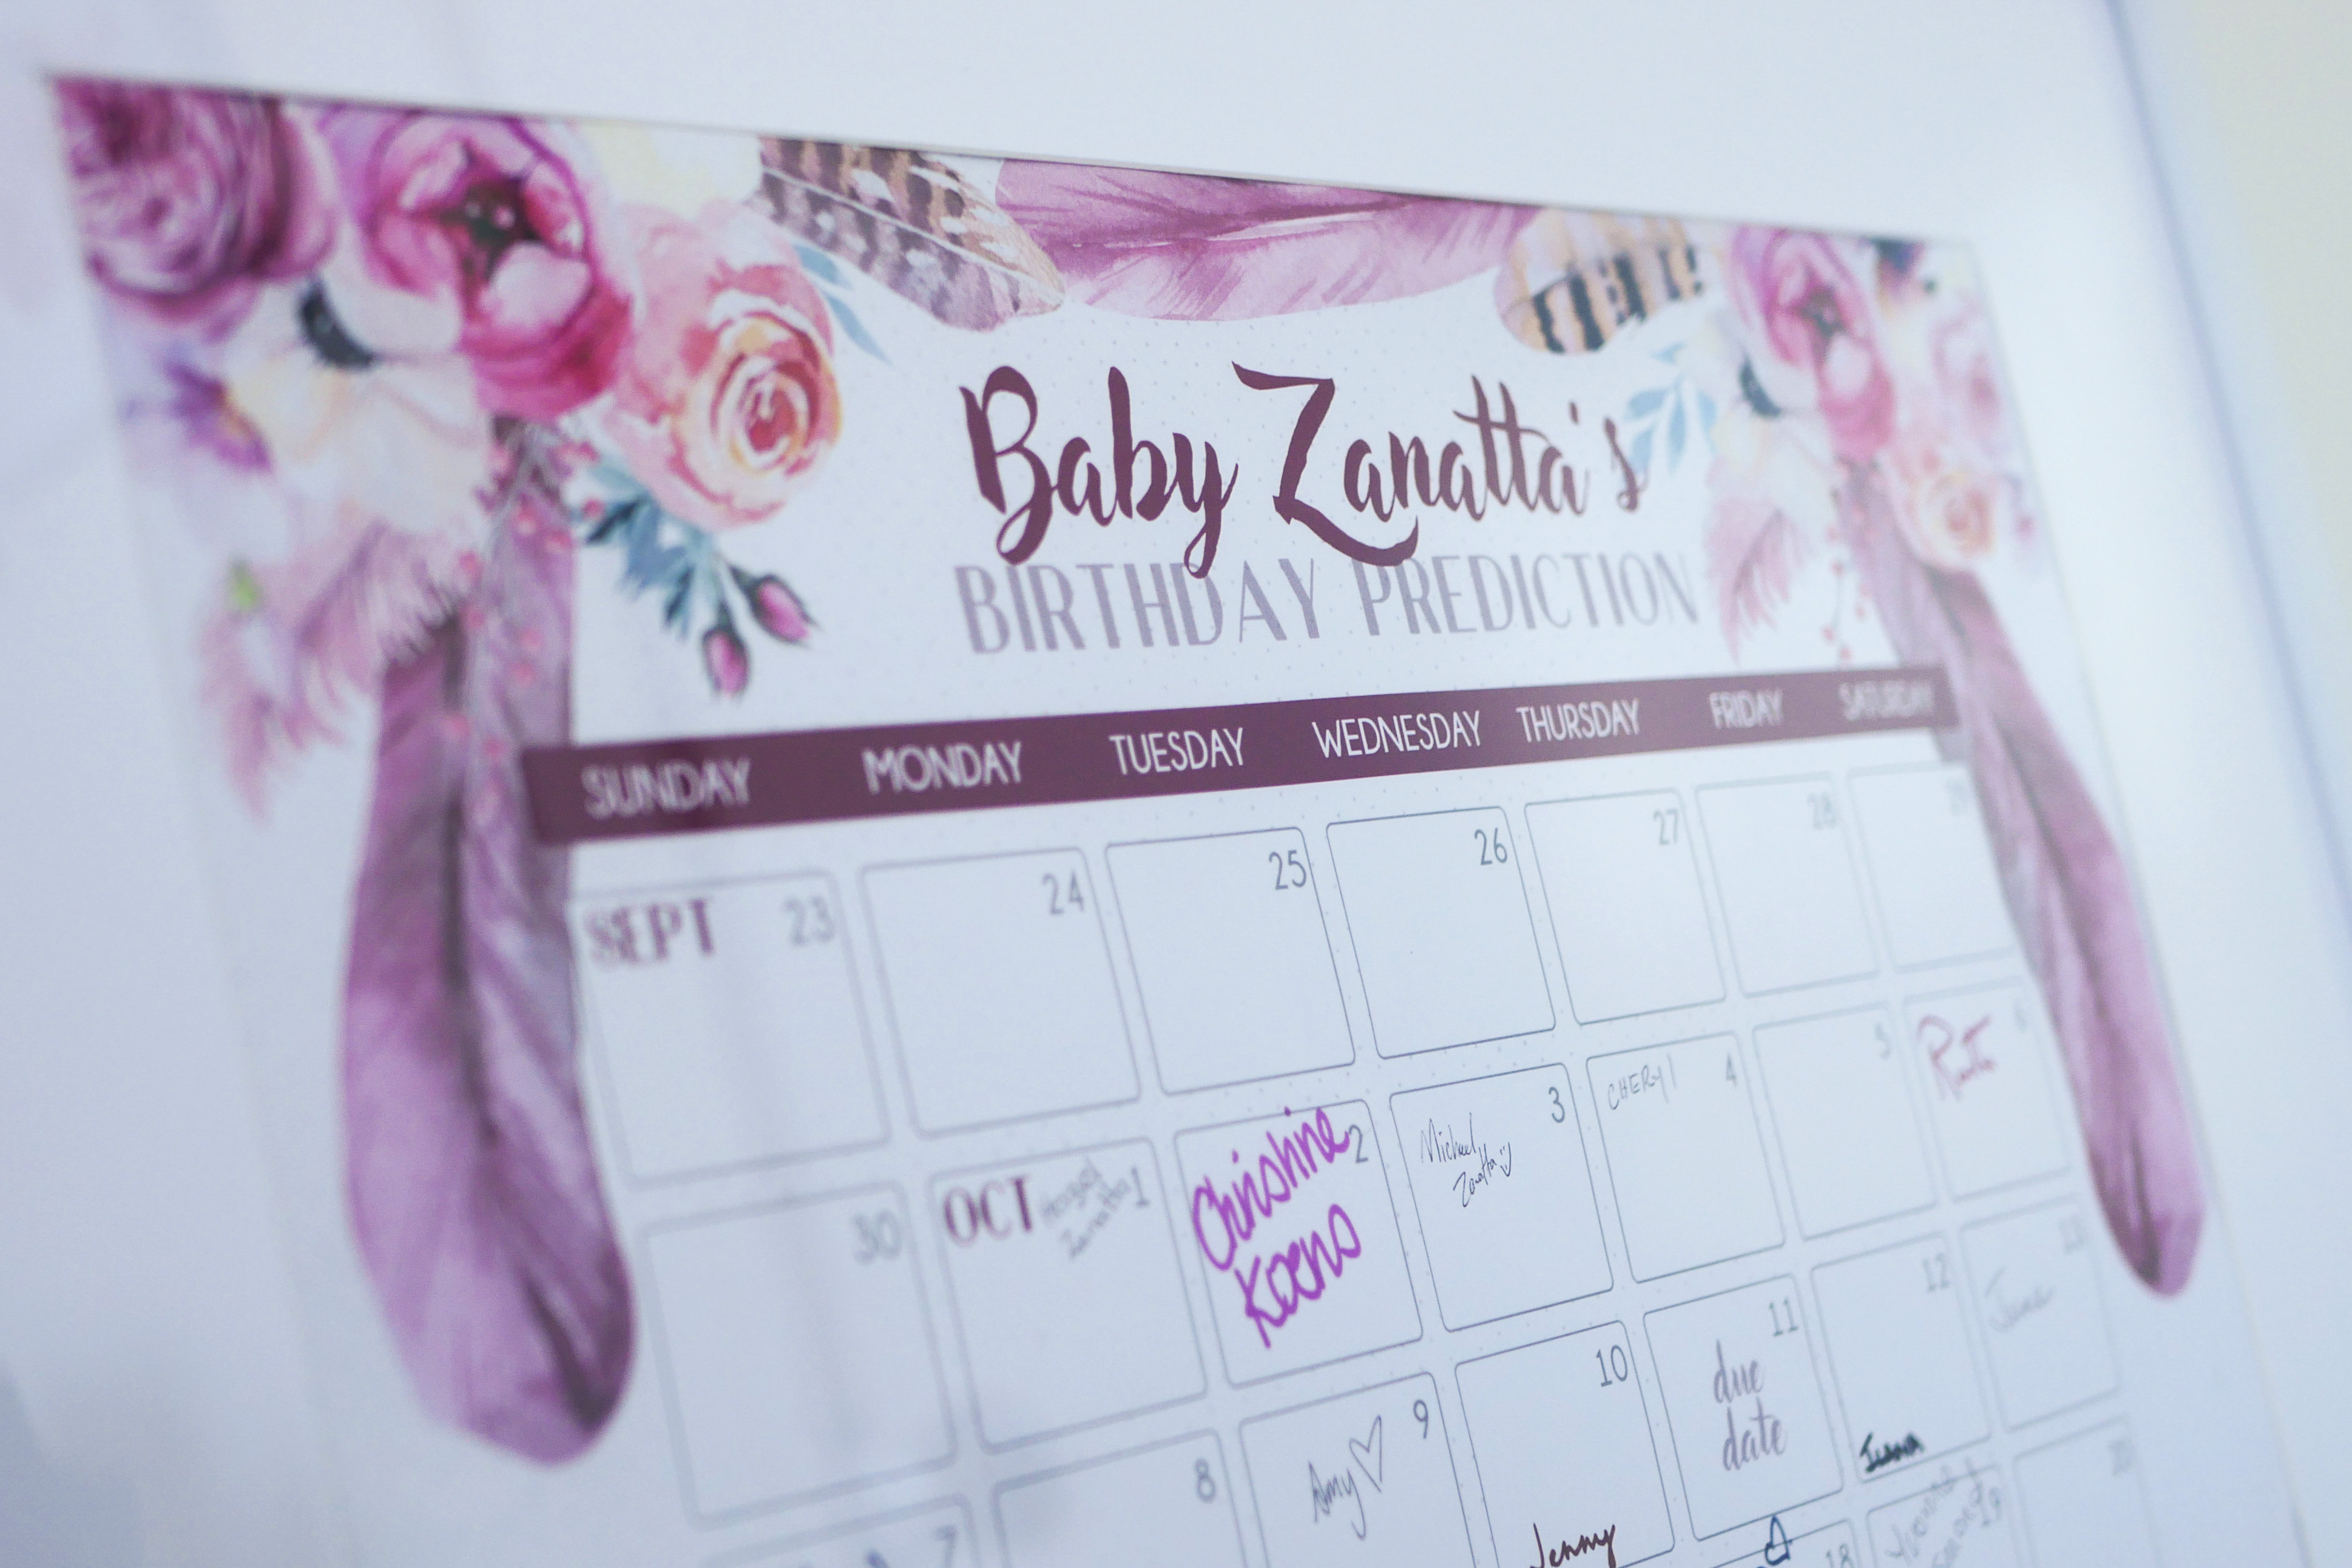 Floral Baby Shower Birthday Prediction Calendar 3